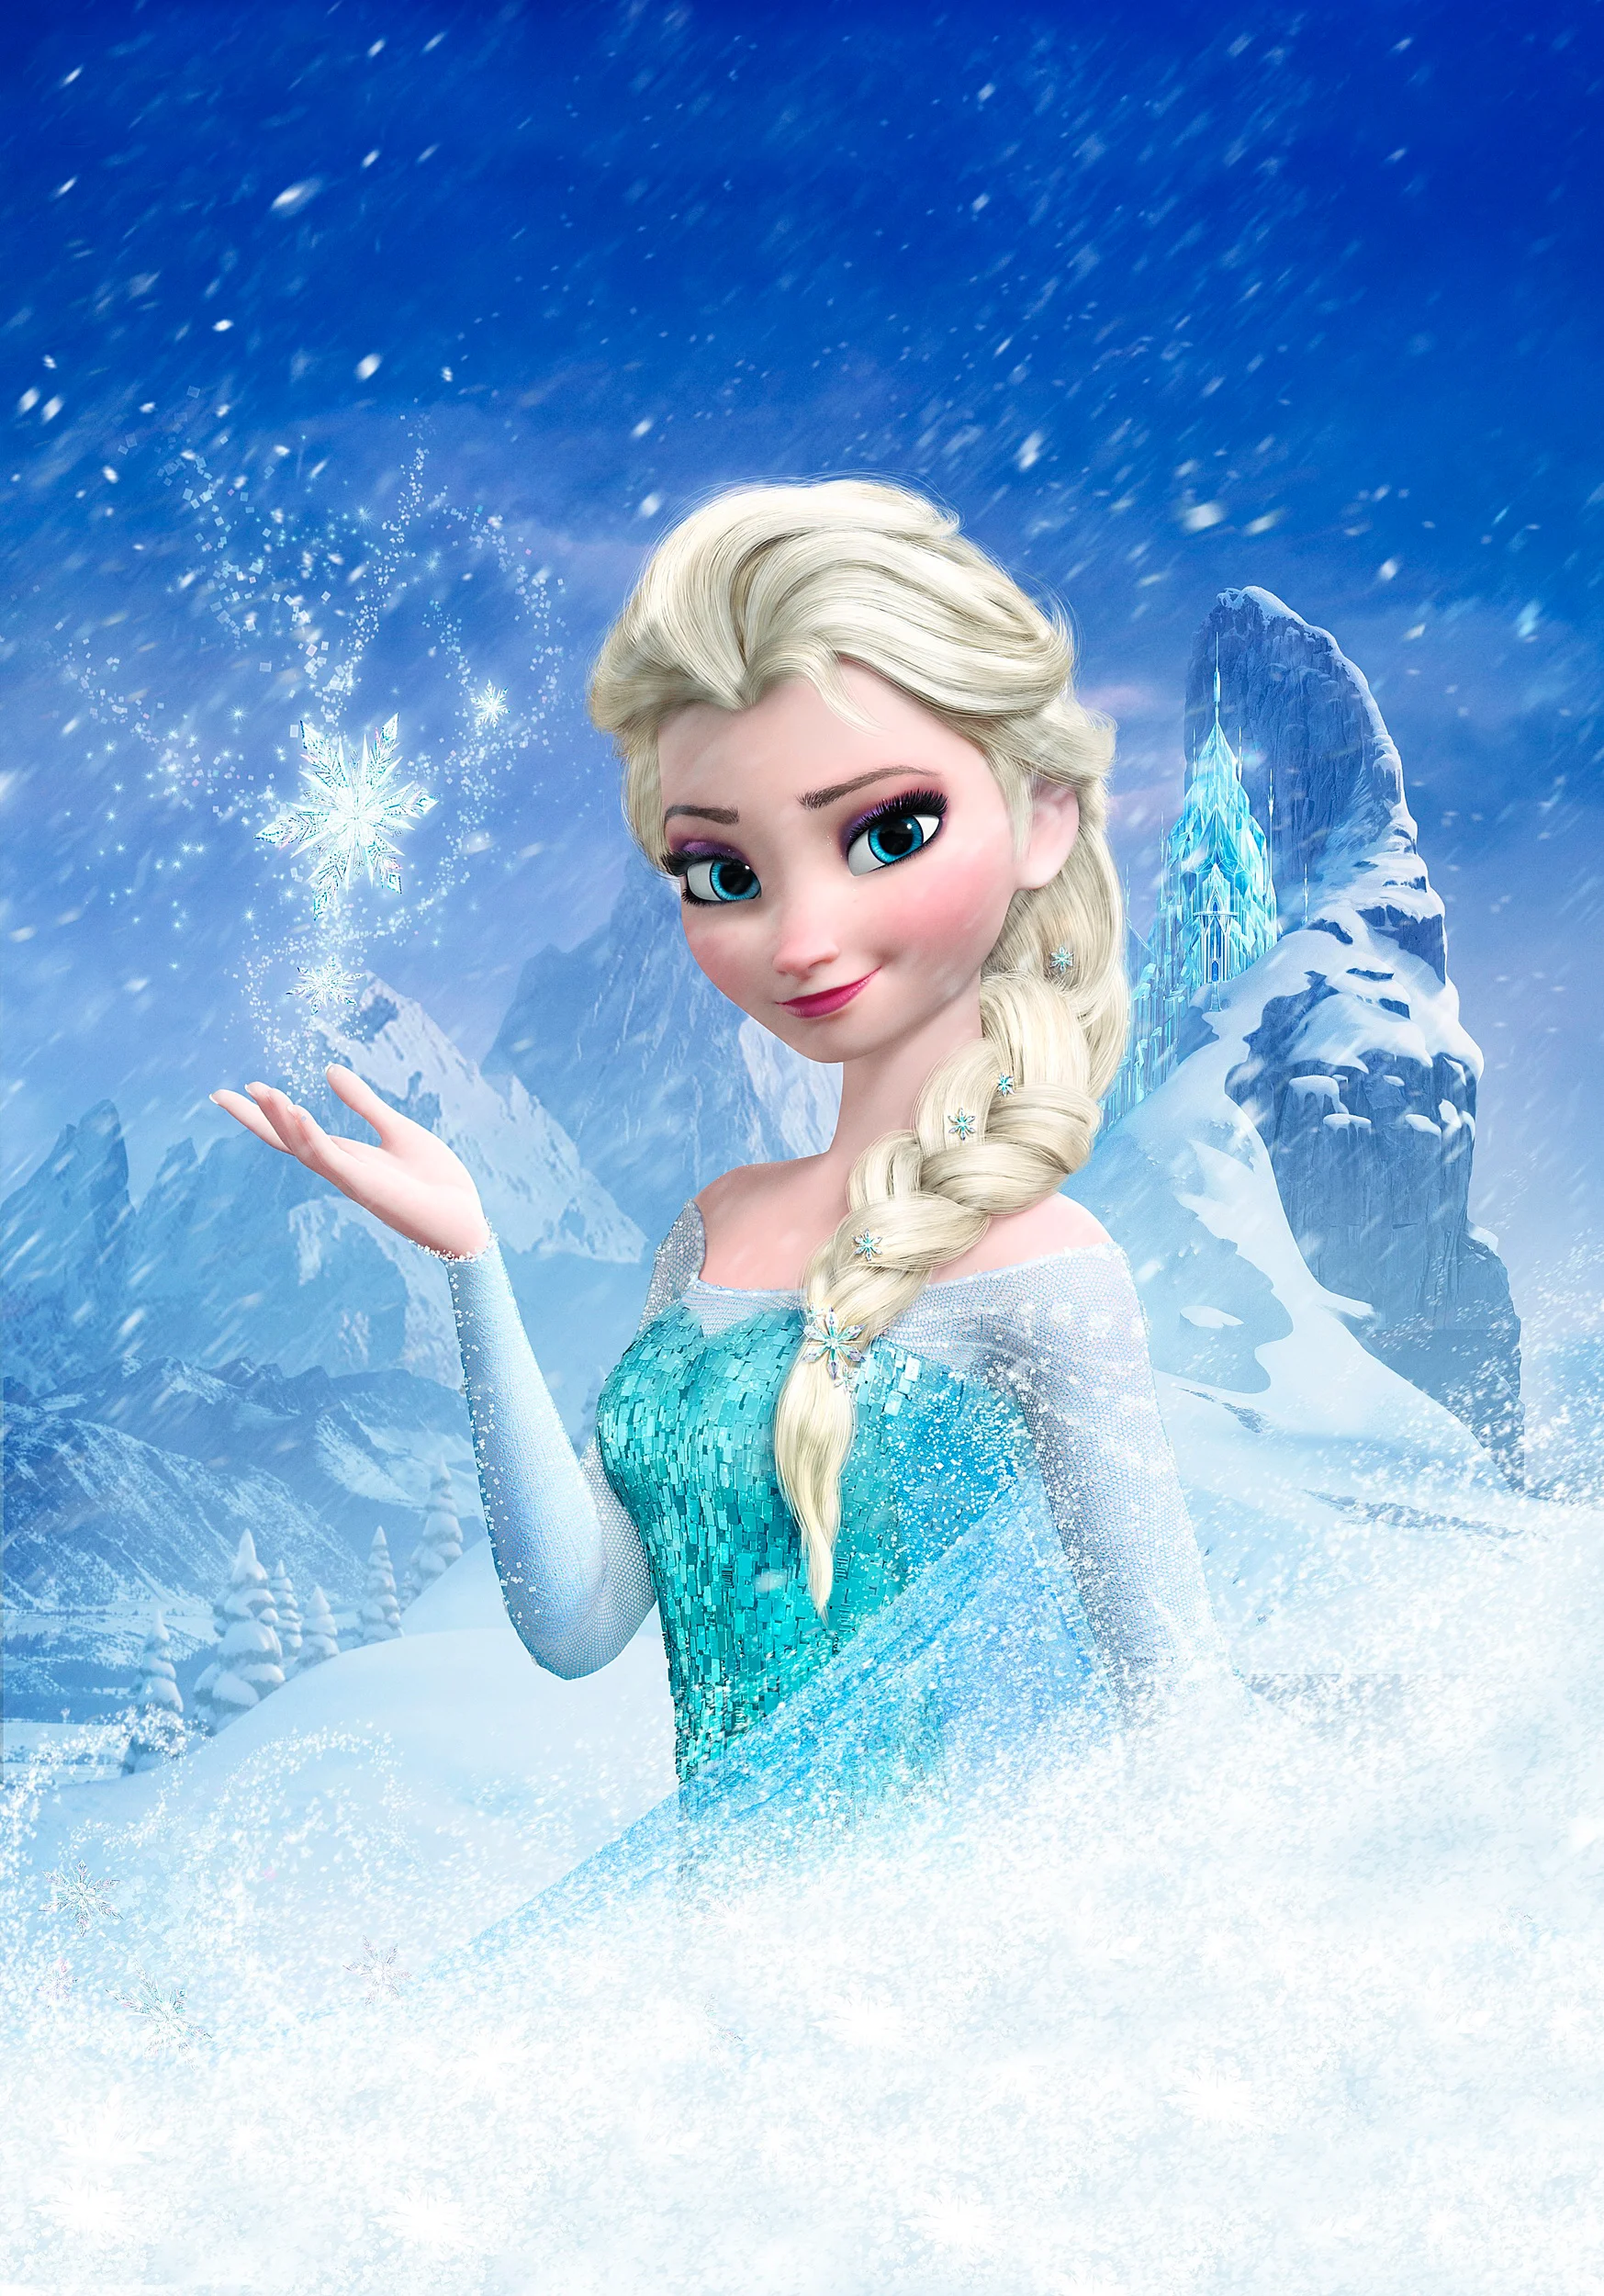 Смотреть Холодное сердце / Frozen (2013) онлайн